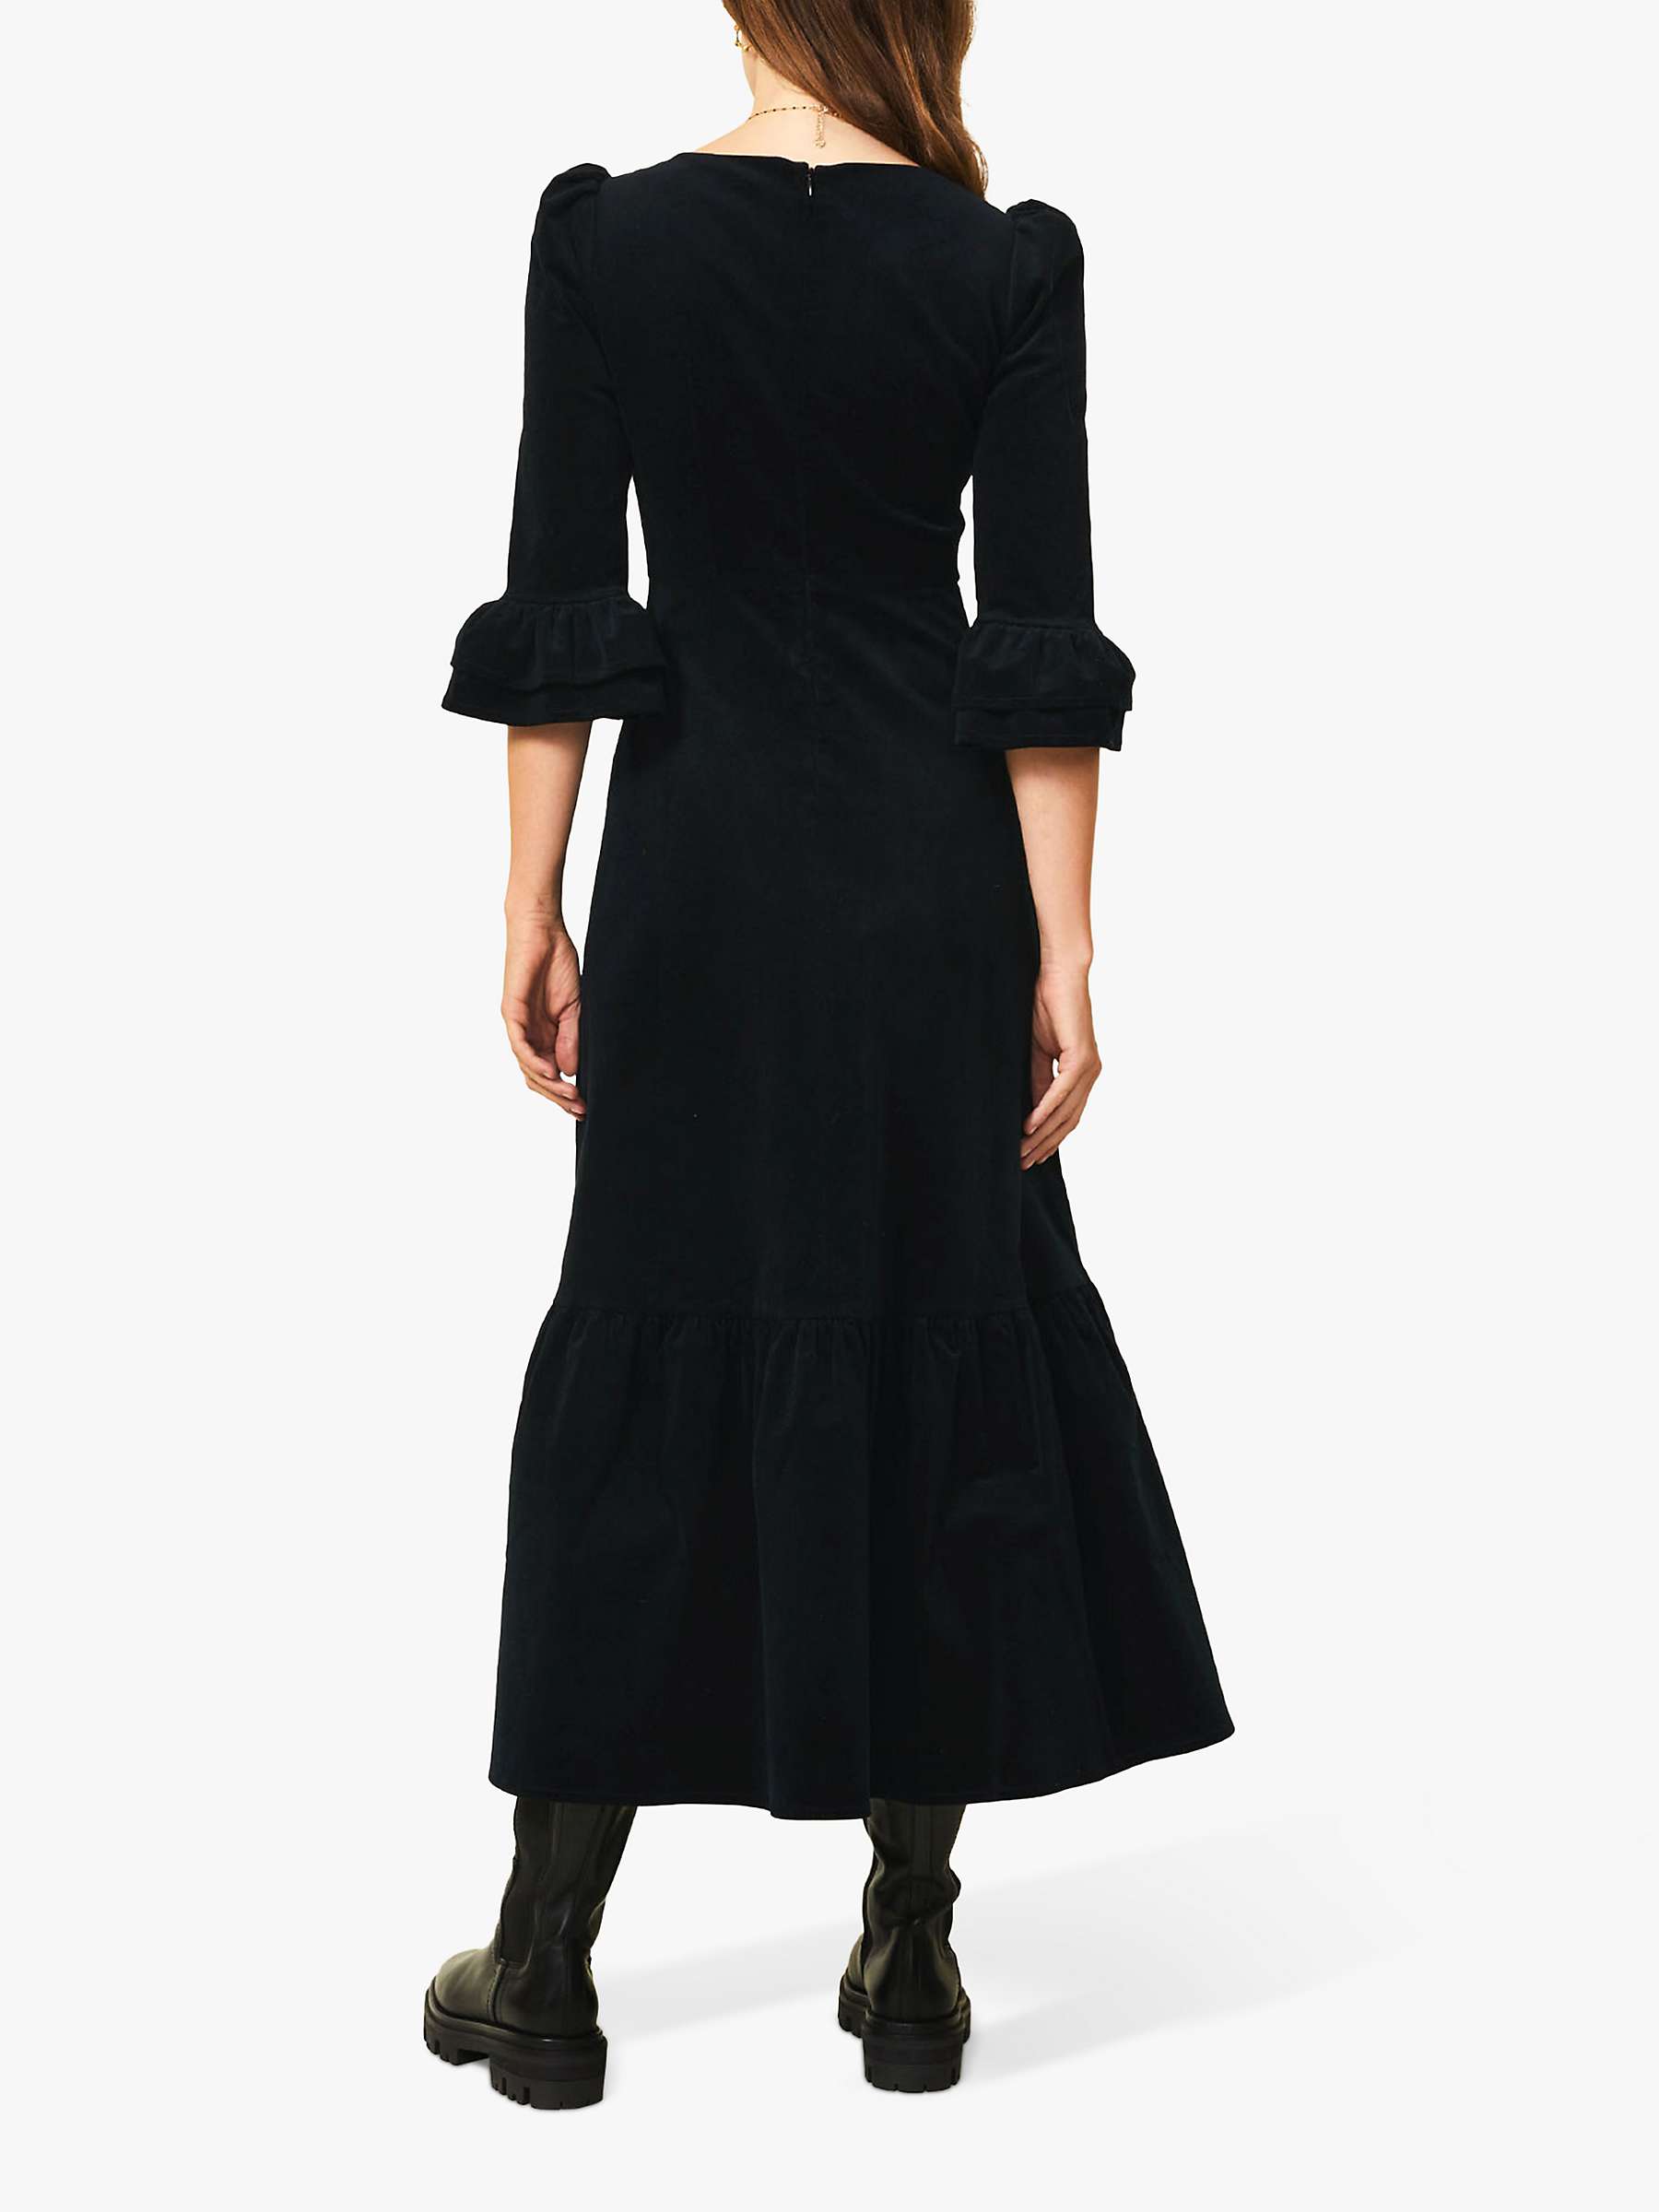 Buy Aspiga Victoria 3/4 Sleeve Stretch Corduroy Dress Online at johnlewis.com